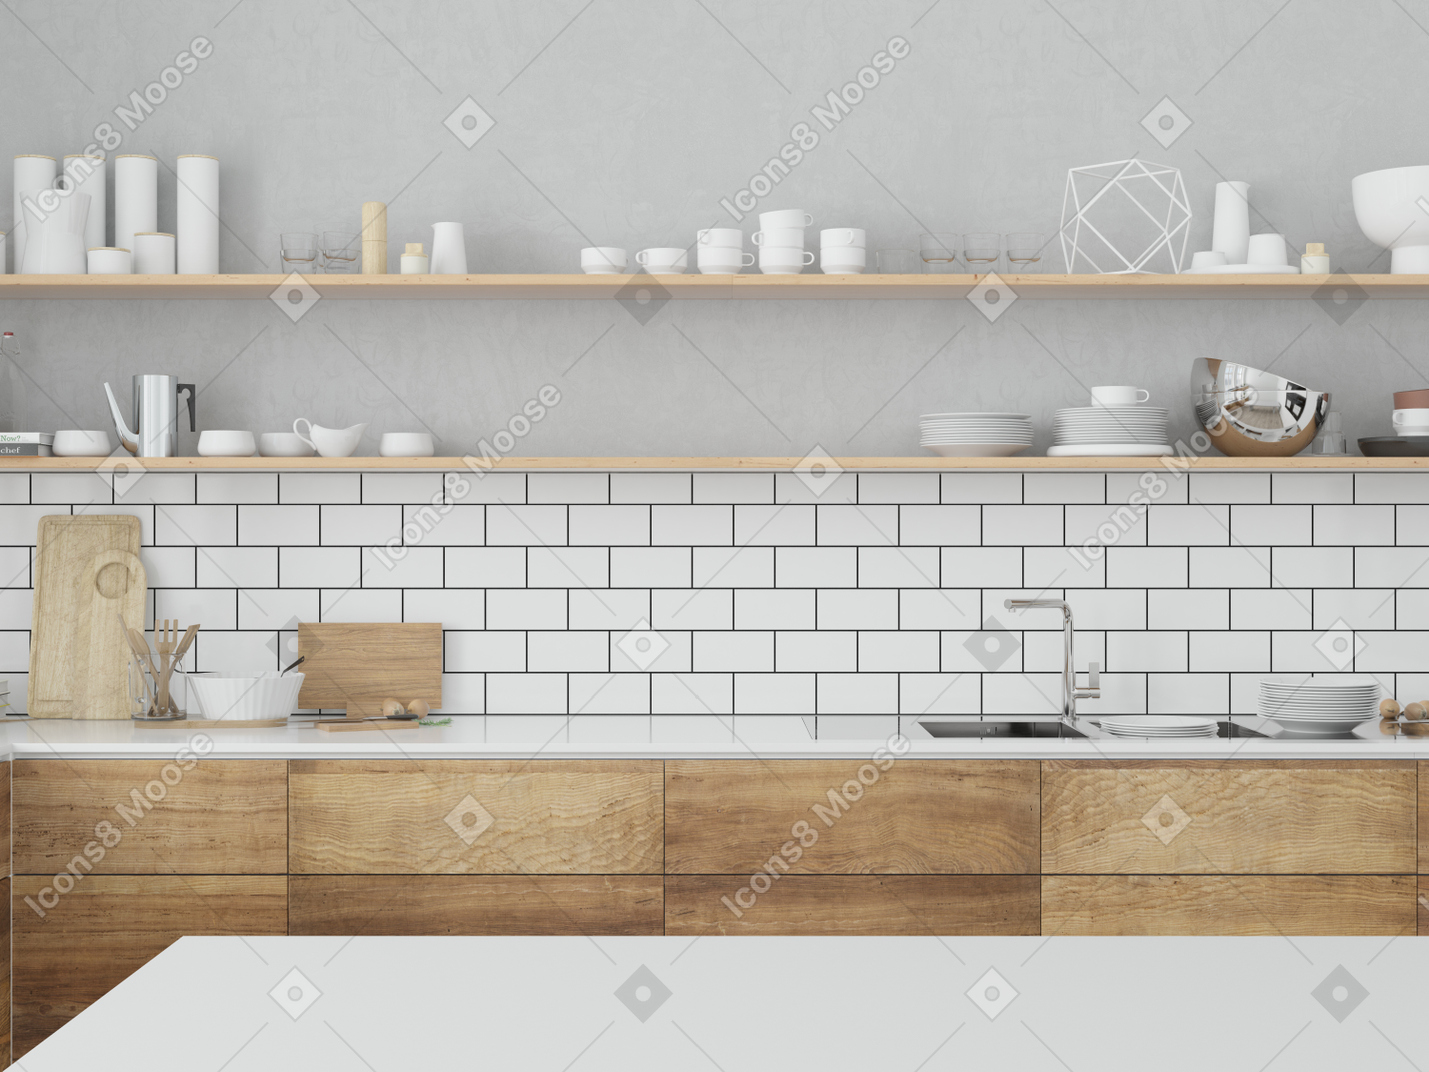 Elegant modern kitchen decor